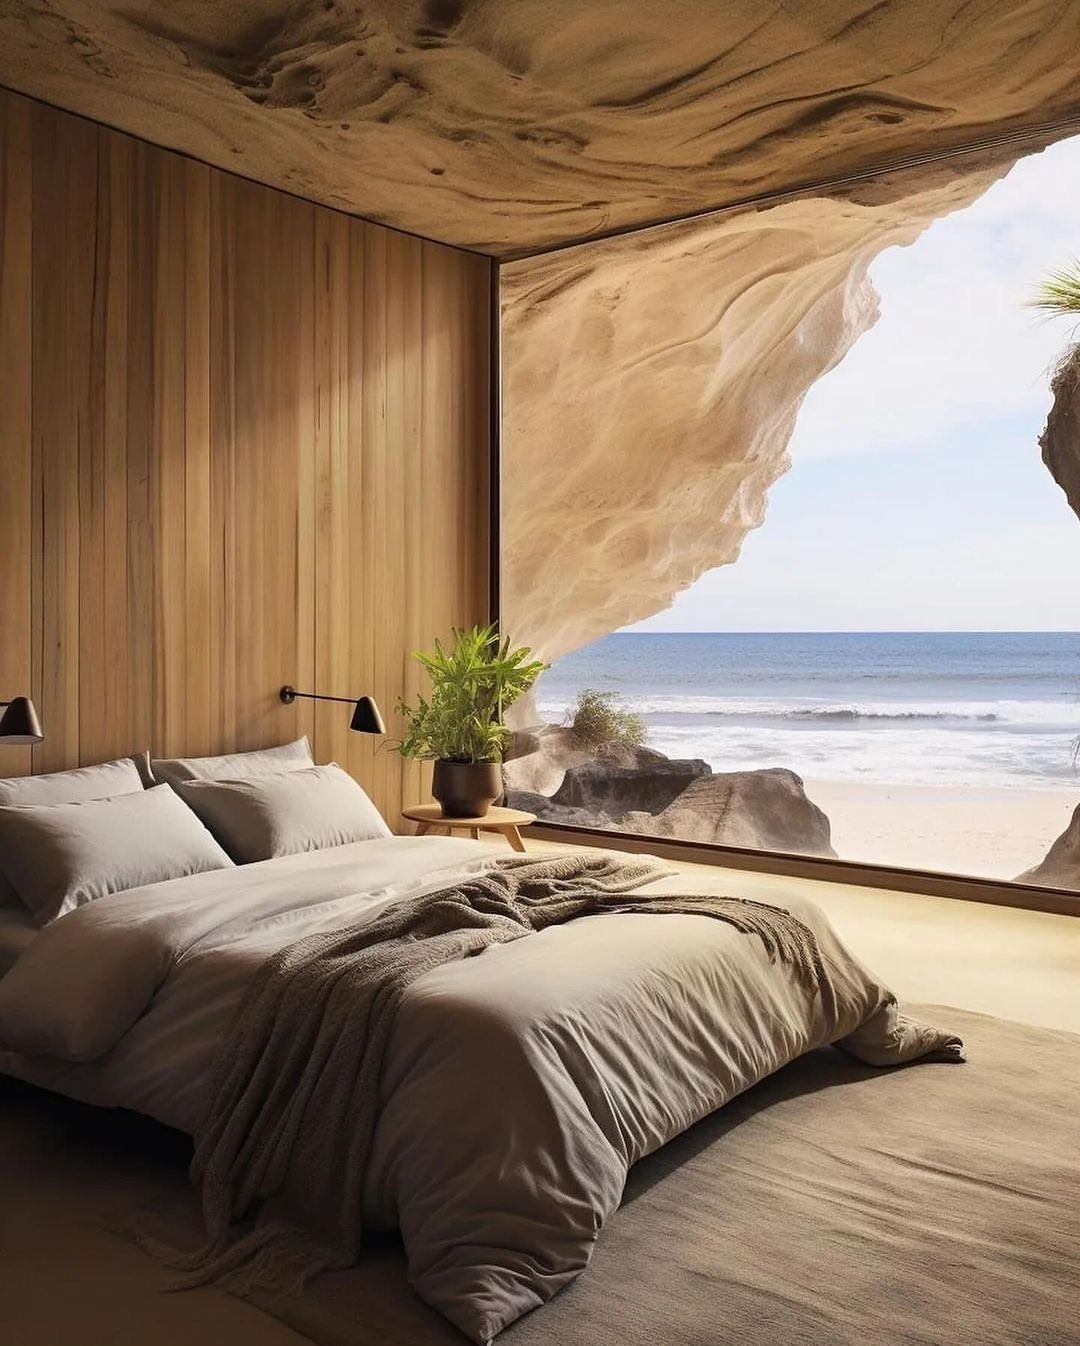 Master Bedroom With Coastal Views of Beach